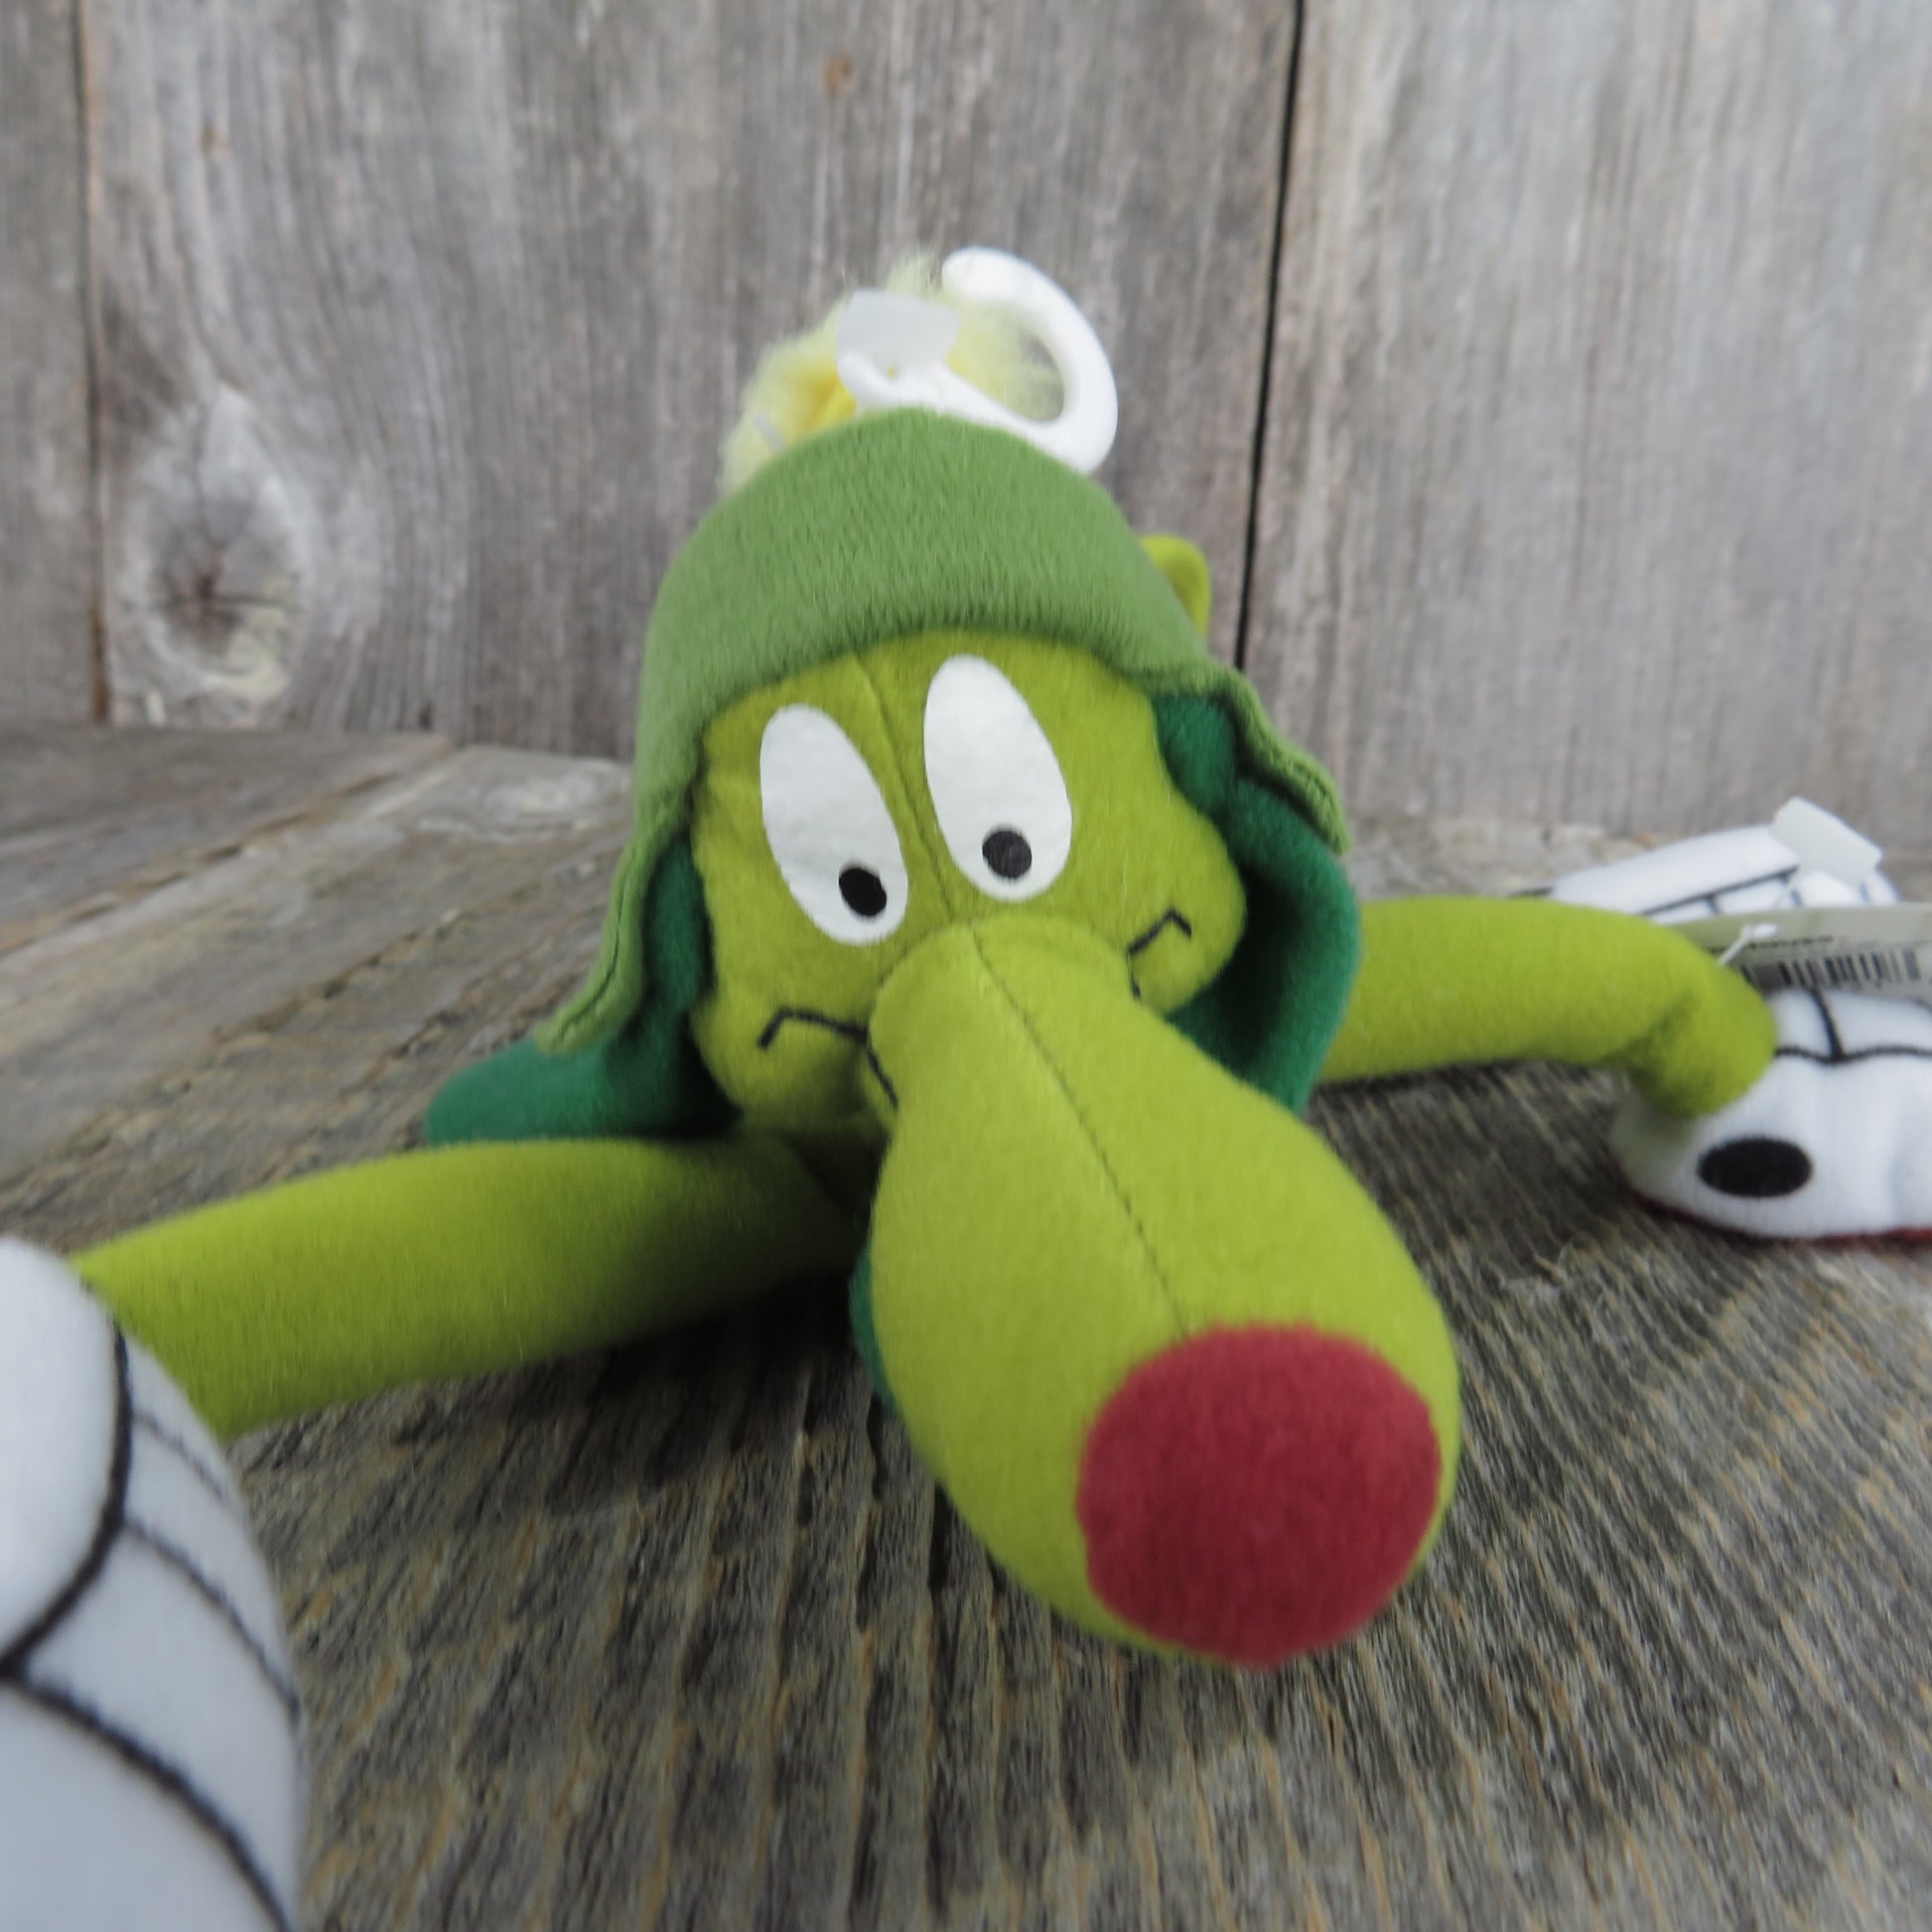 Vintage Marvin Martian K-9 Dog Beanie Plush Looney Tunes Applause Stuffed Animal 1999 Green - At Grandma's Table